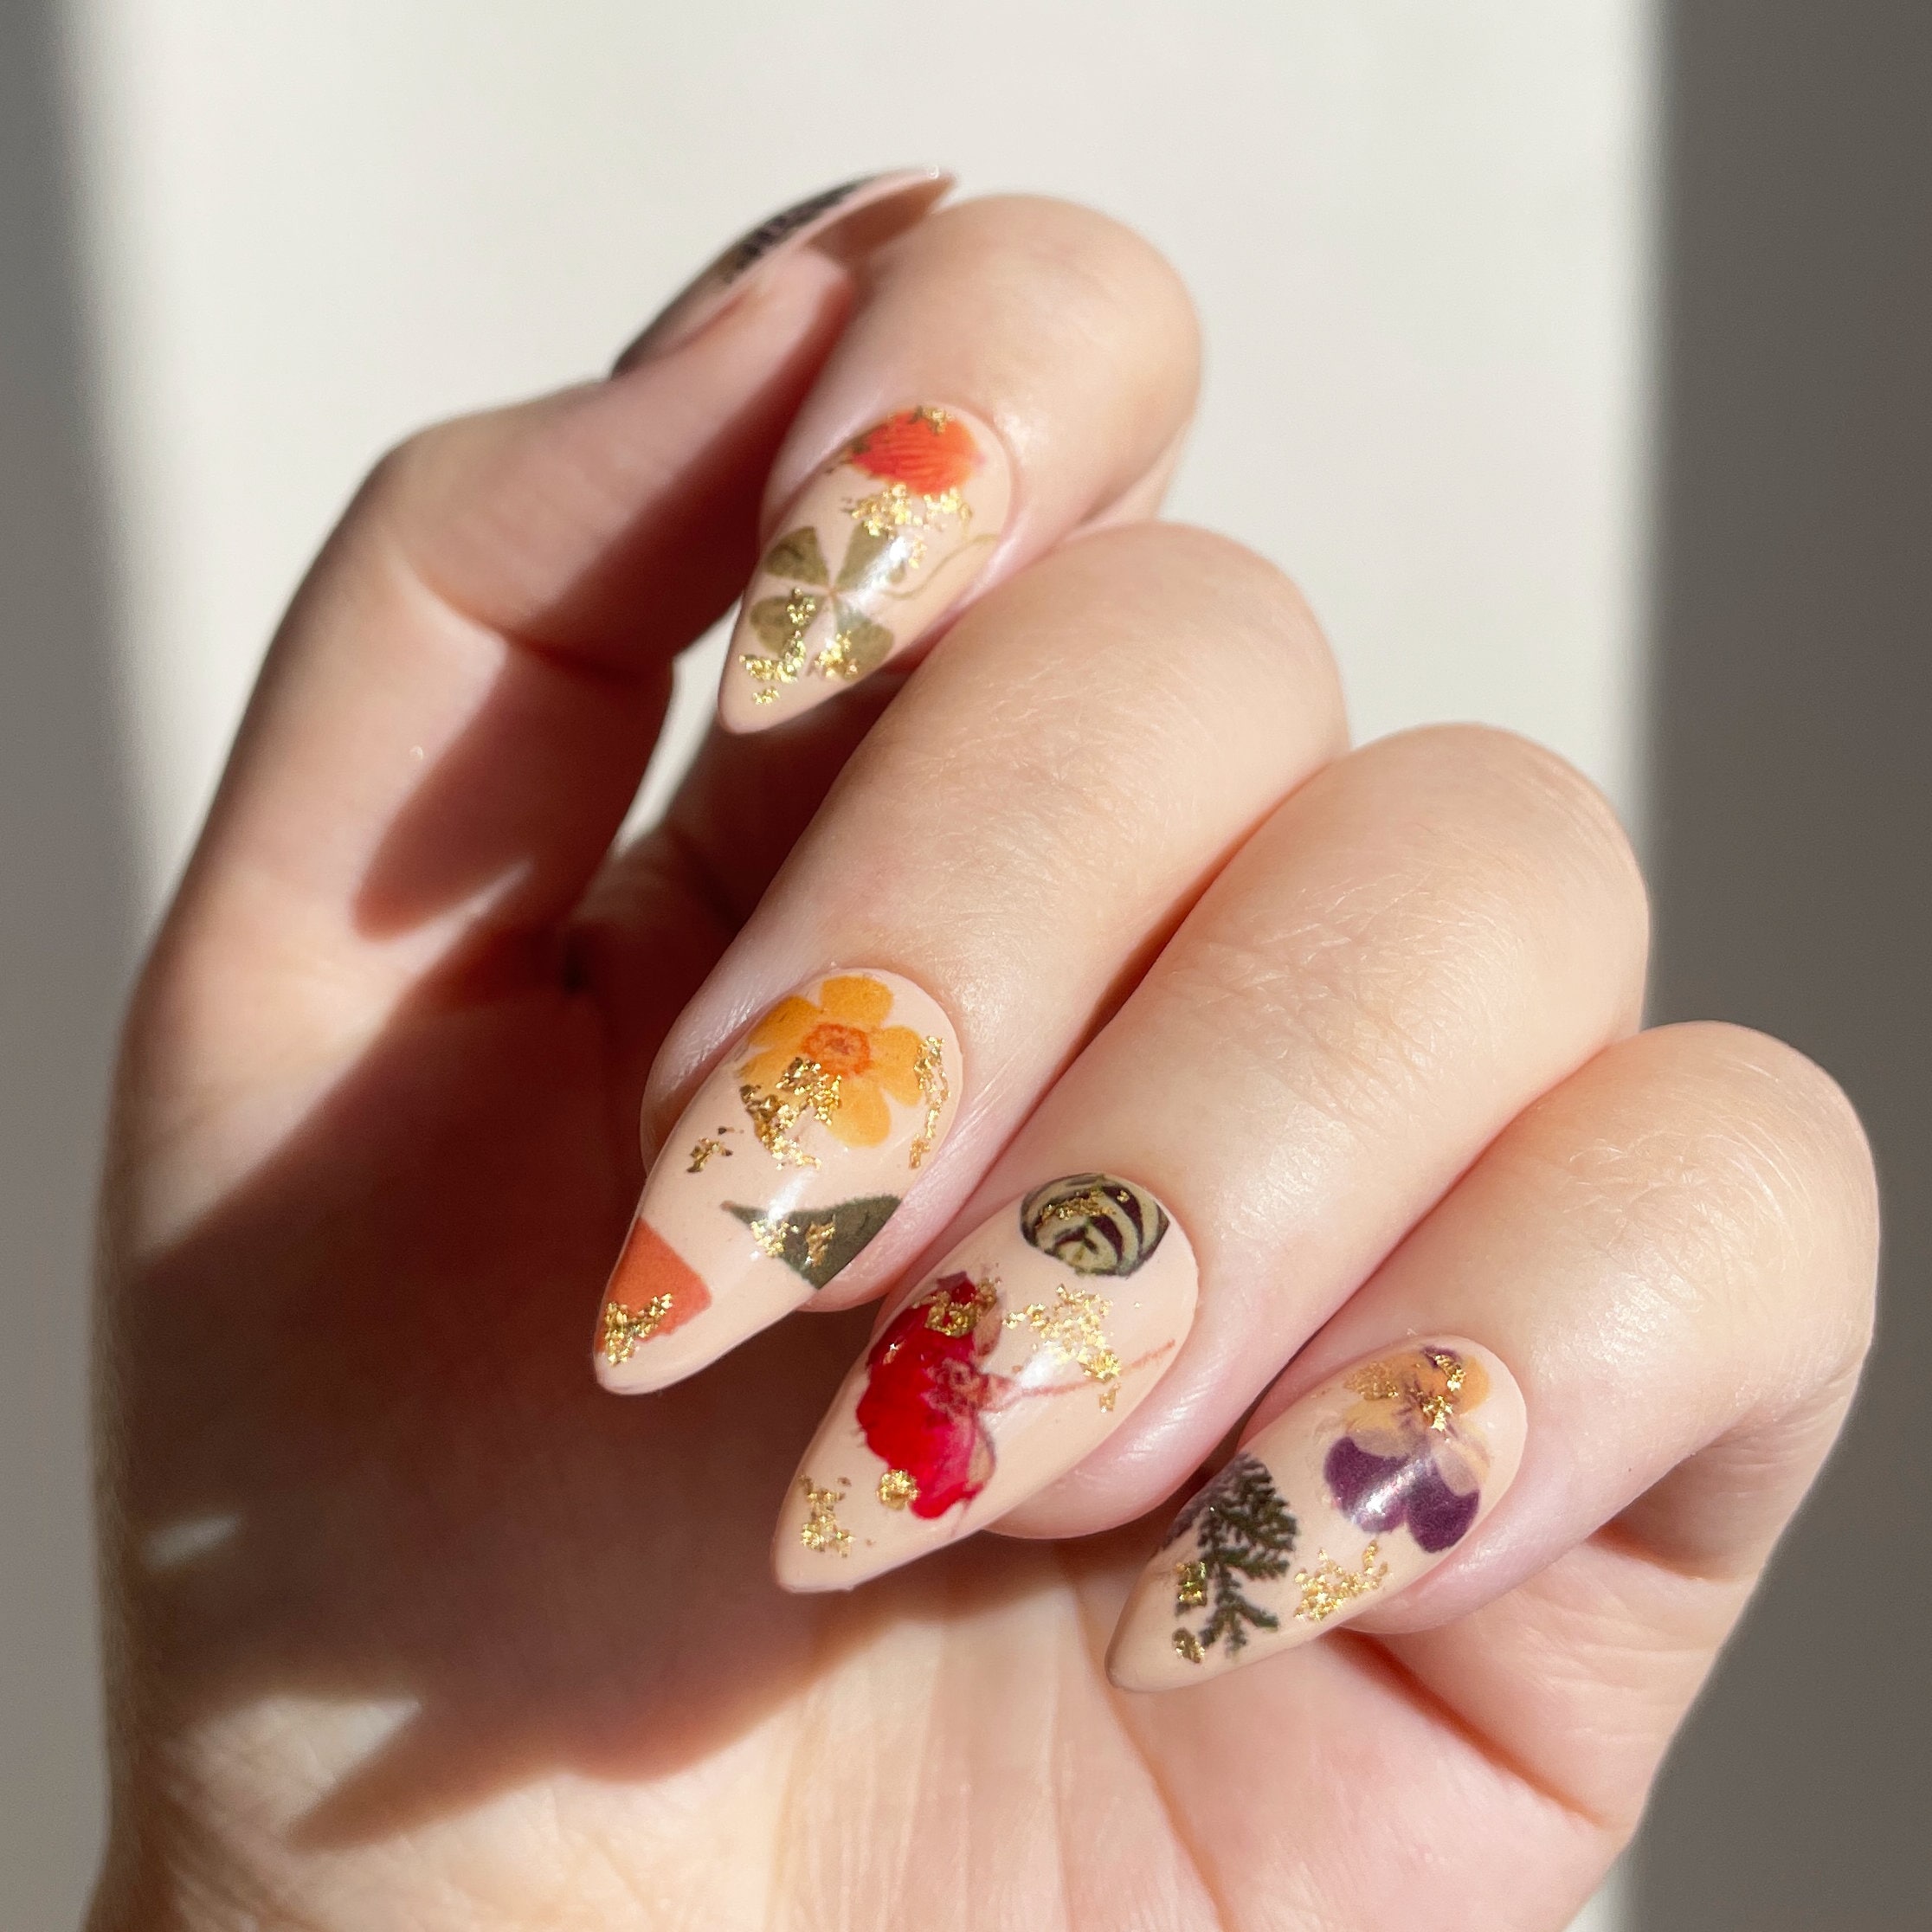 How To DIY Dried Flower Nails - Lulus.com Fashion Blog